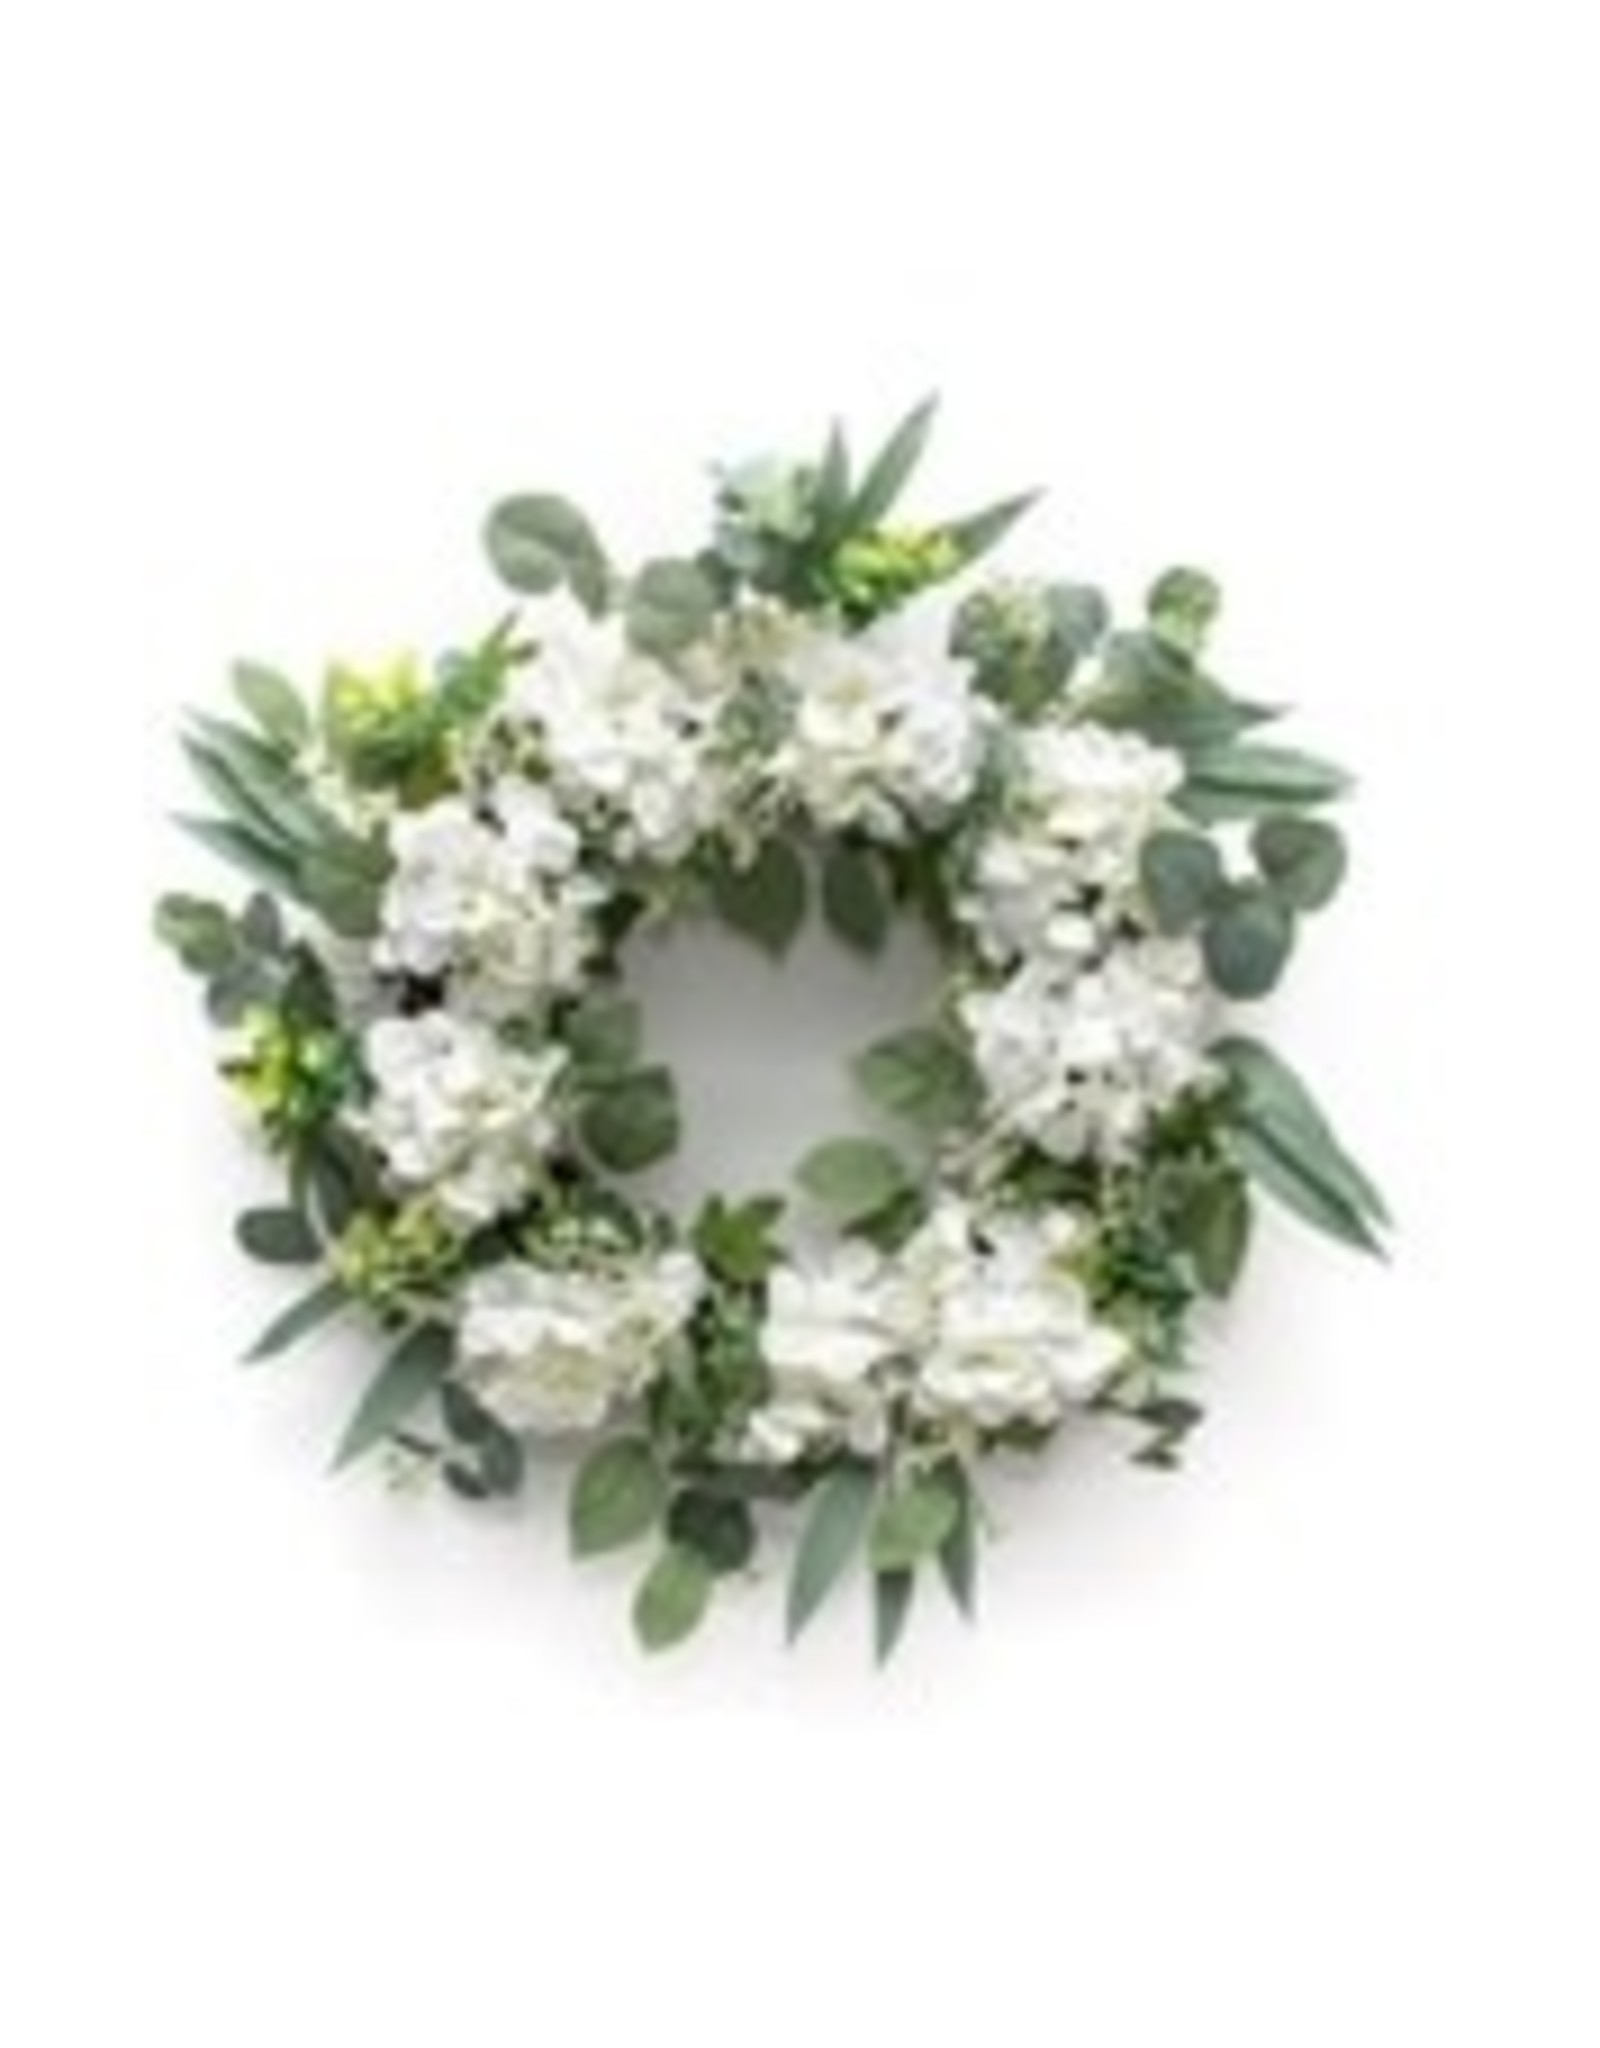 Hydrangea Wreath 24"D Polyester